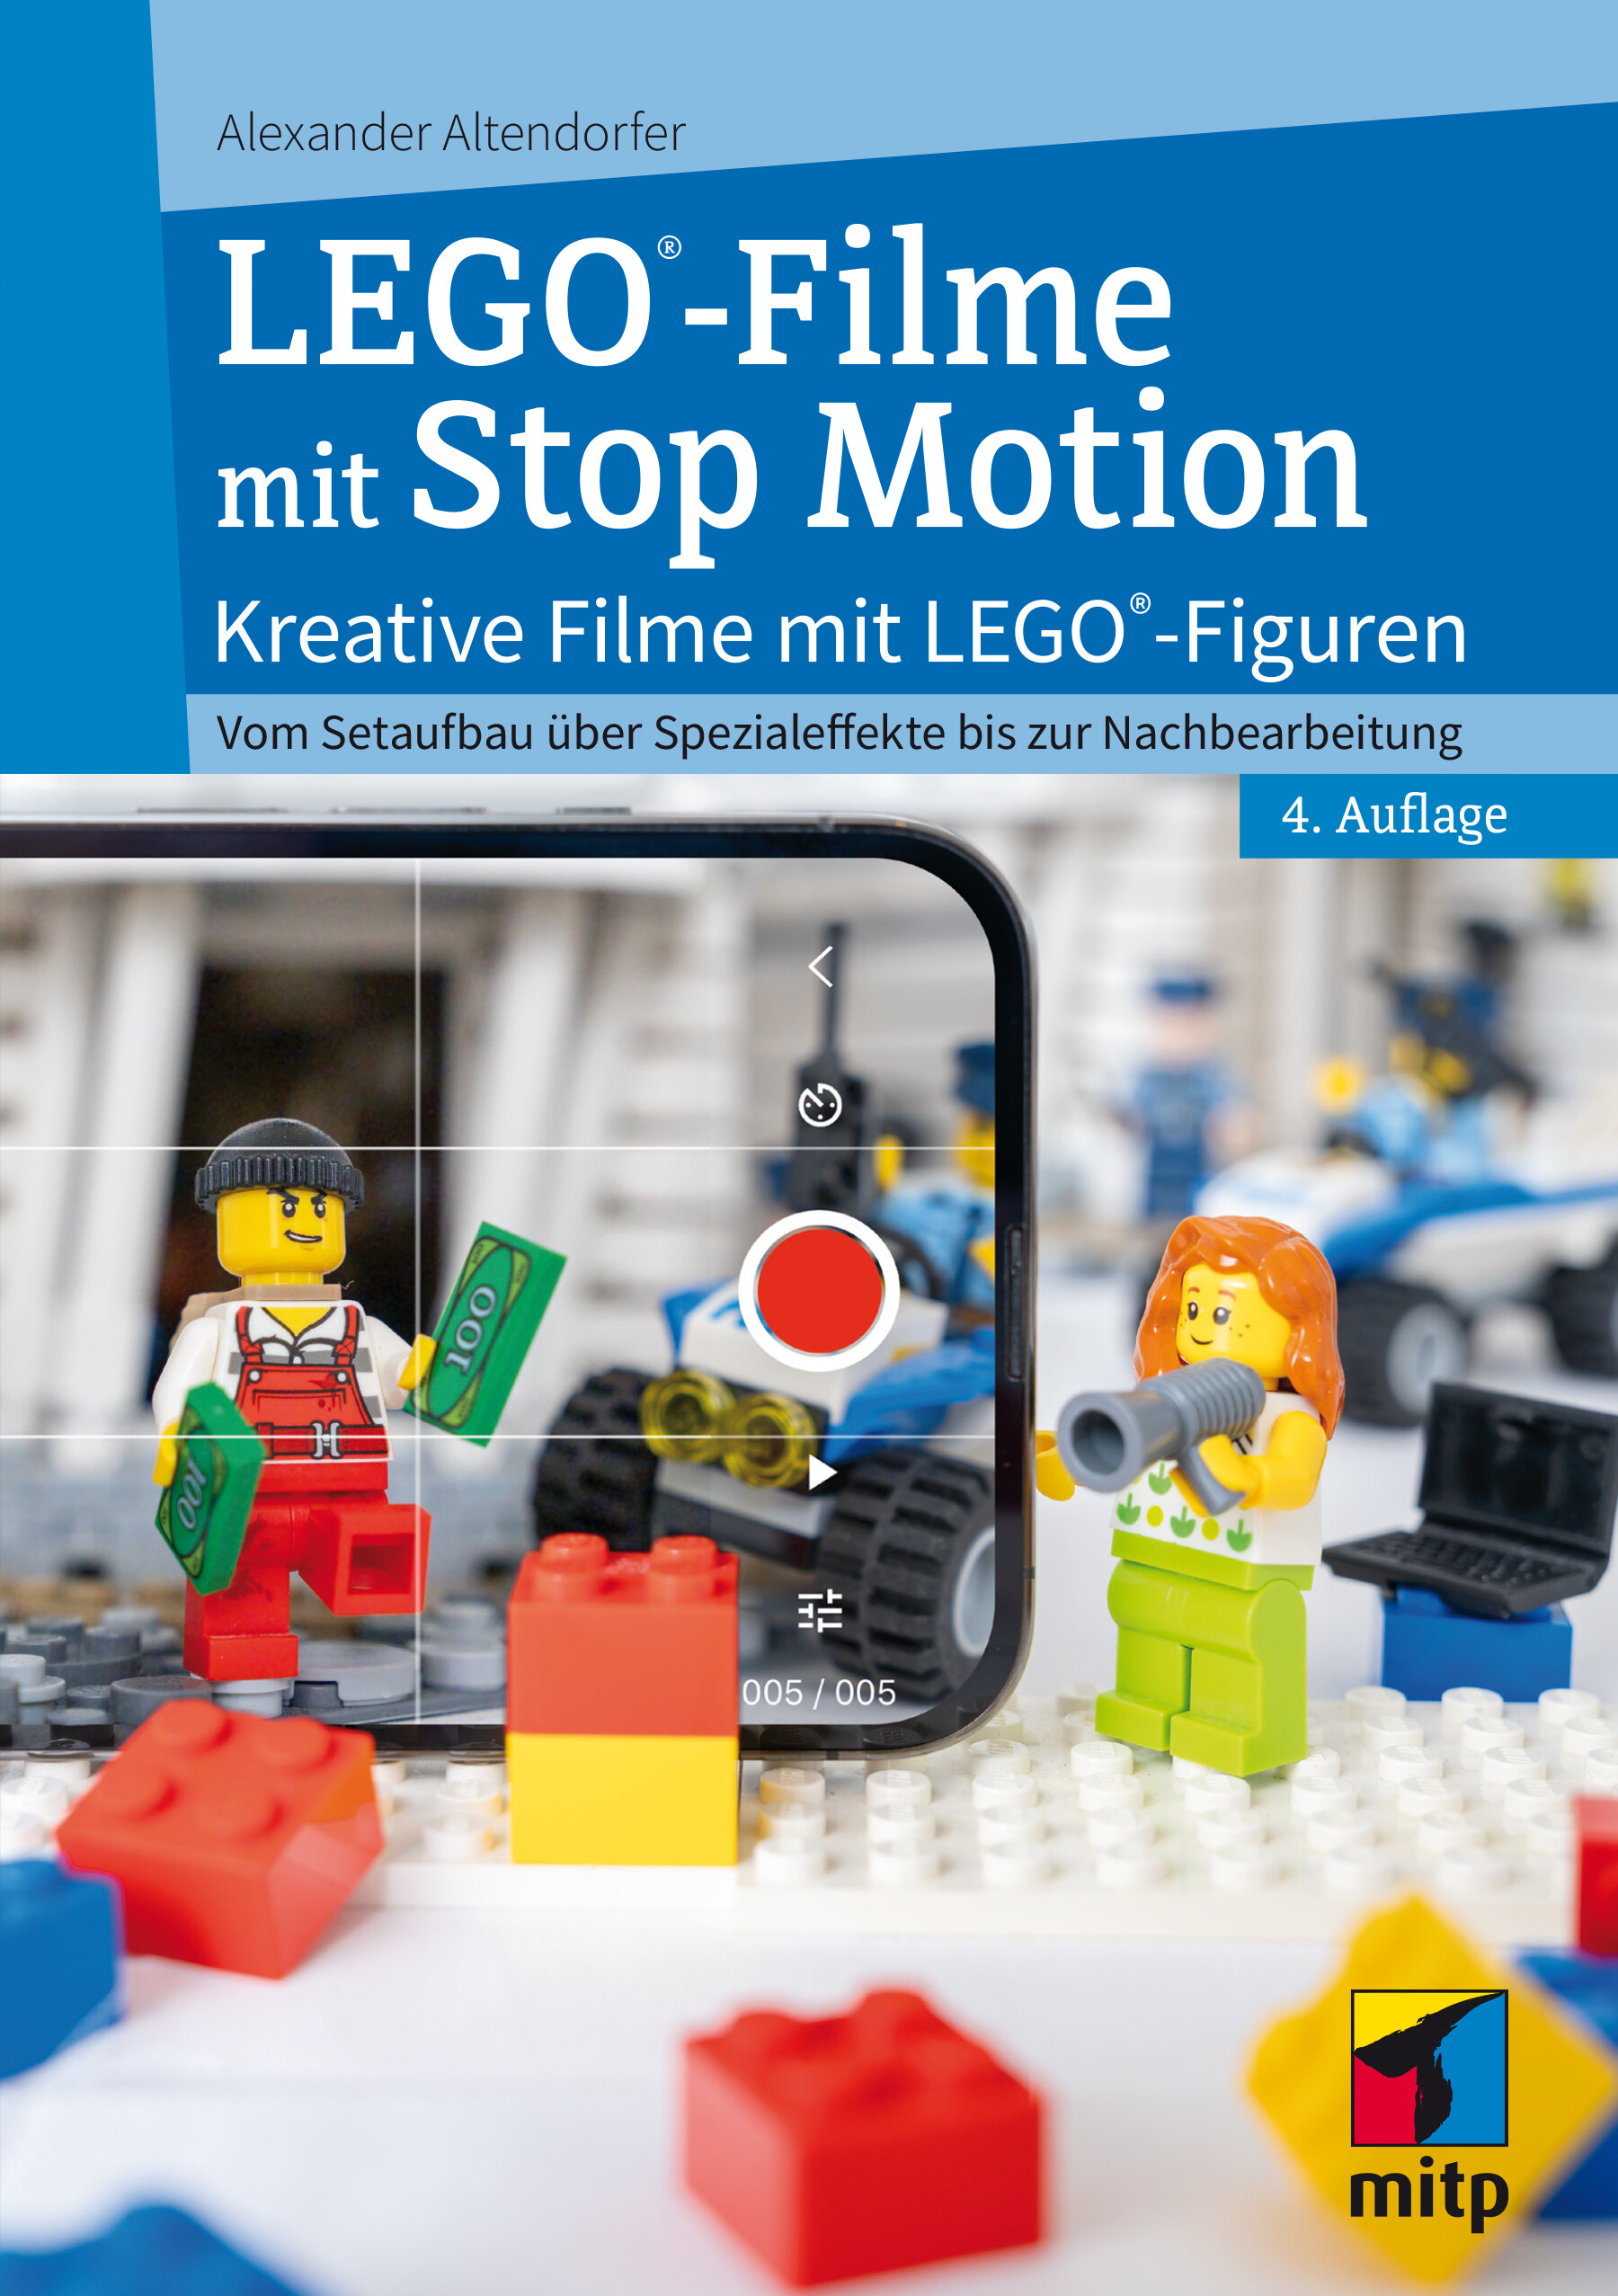 LEGO-Filme mit Stop Motion (4. Auflage)